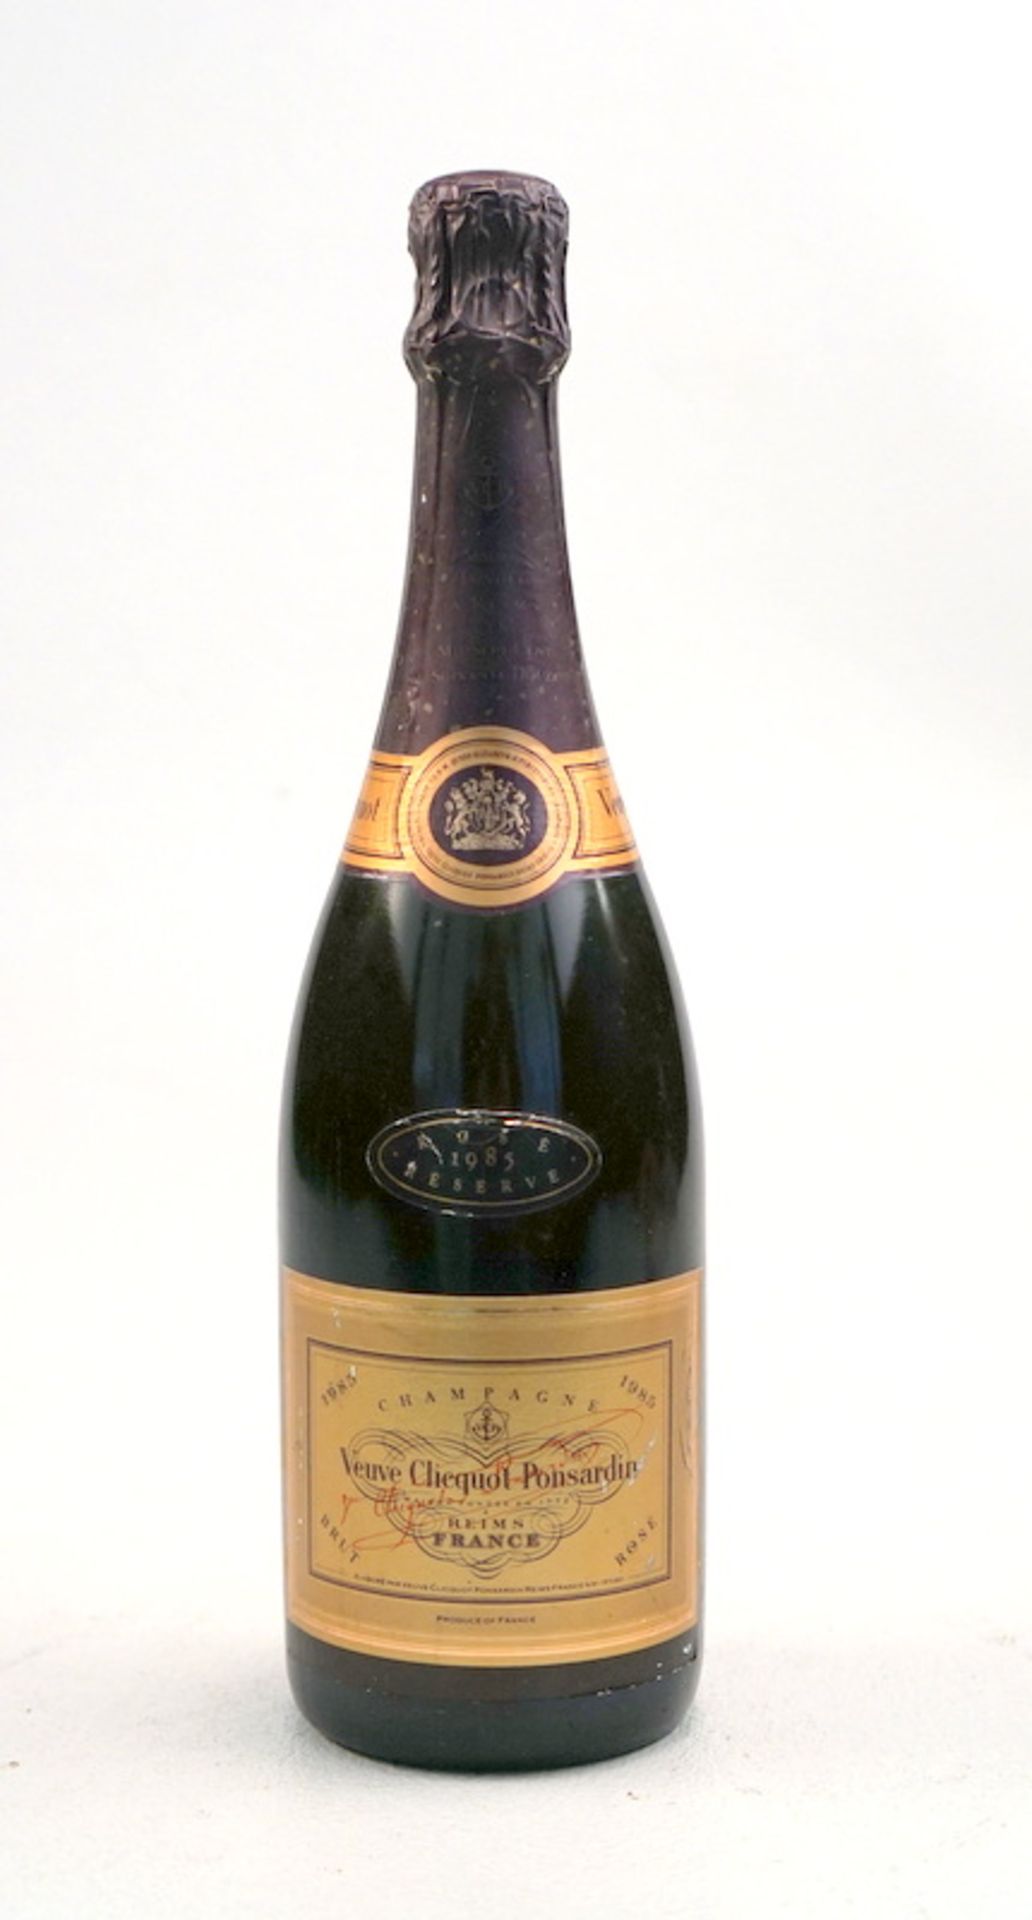 Eine Flasche Champagner, Veuve Cliquot Ponsardin, Reims, Jahrgang 1985,guter Füllstand, Verschluss